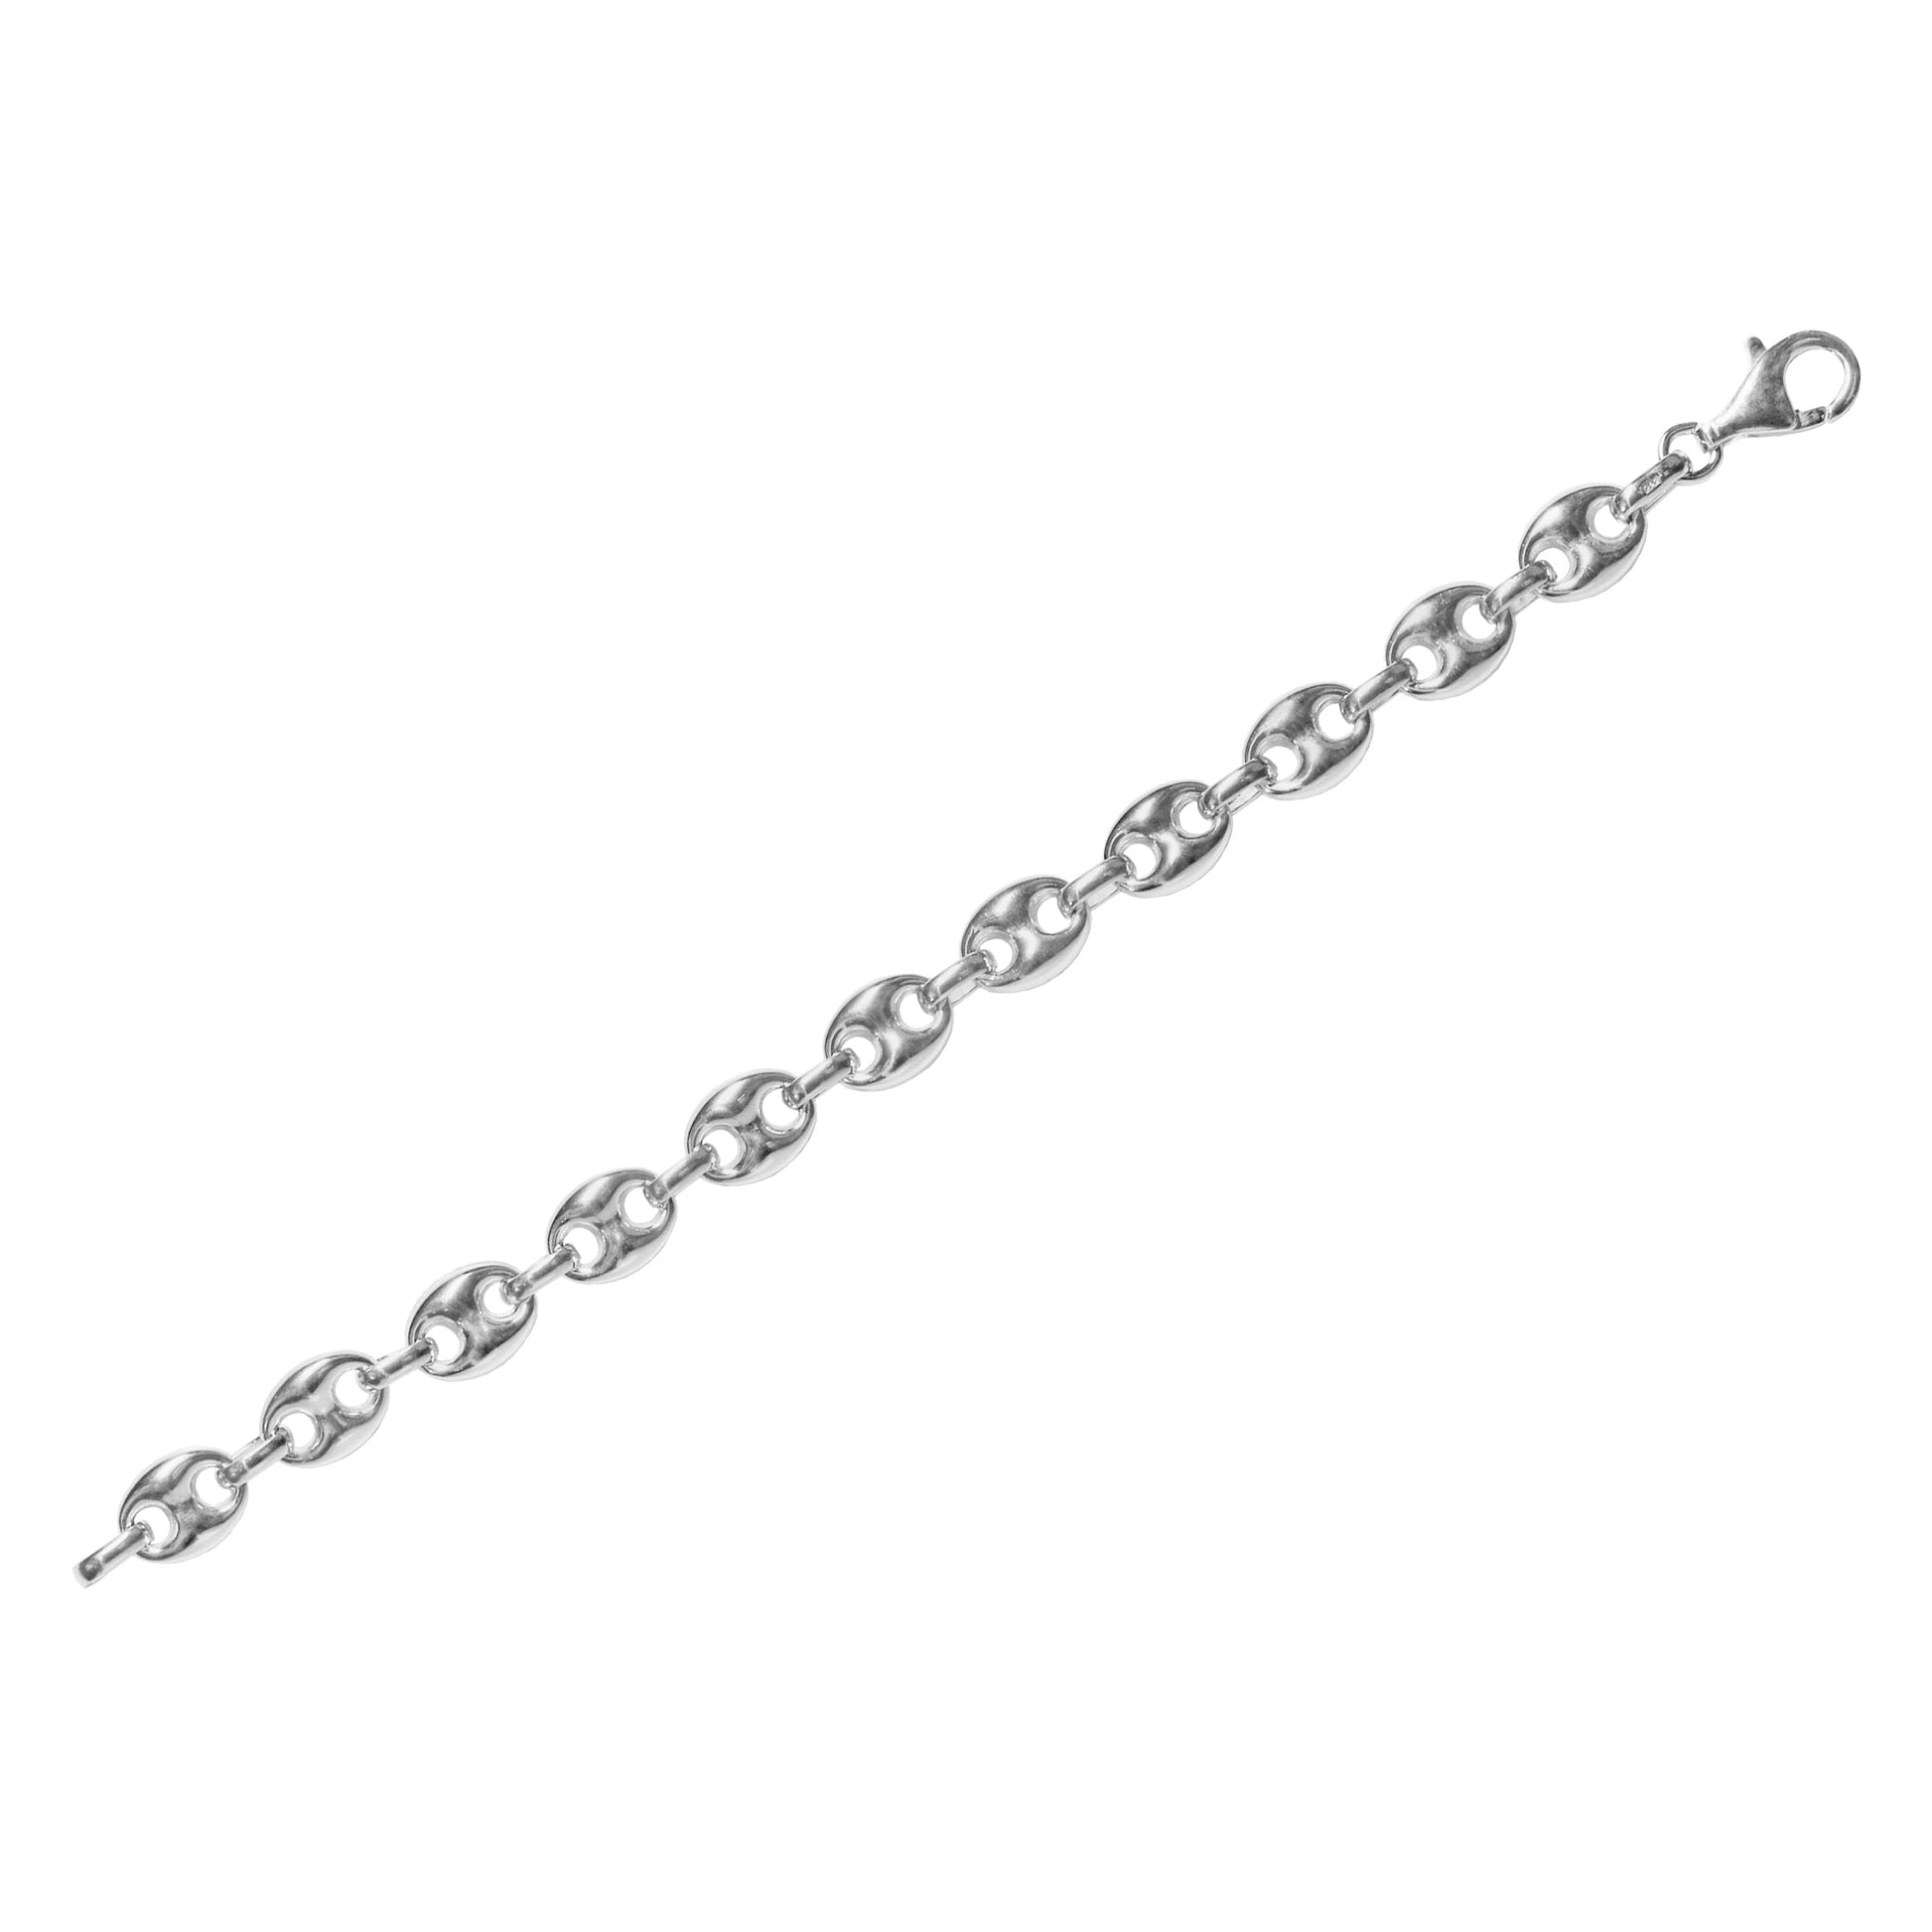 Franco Stellari Italian Sterling Silver Puffed Mariner Link Bracelet, 7.5"